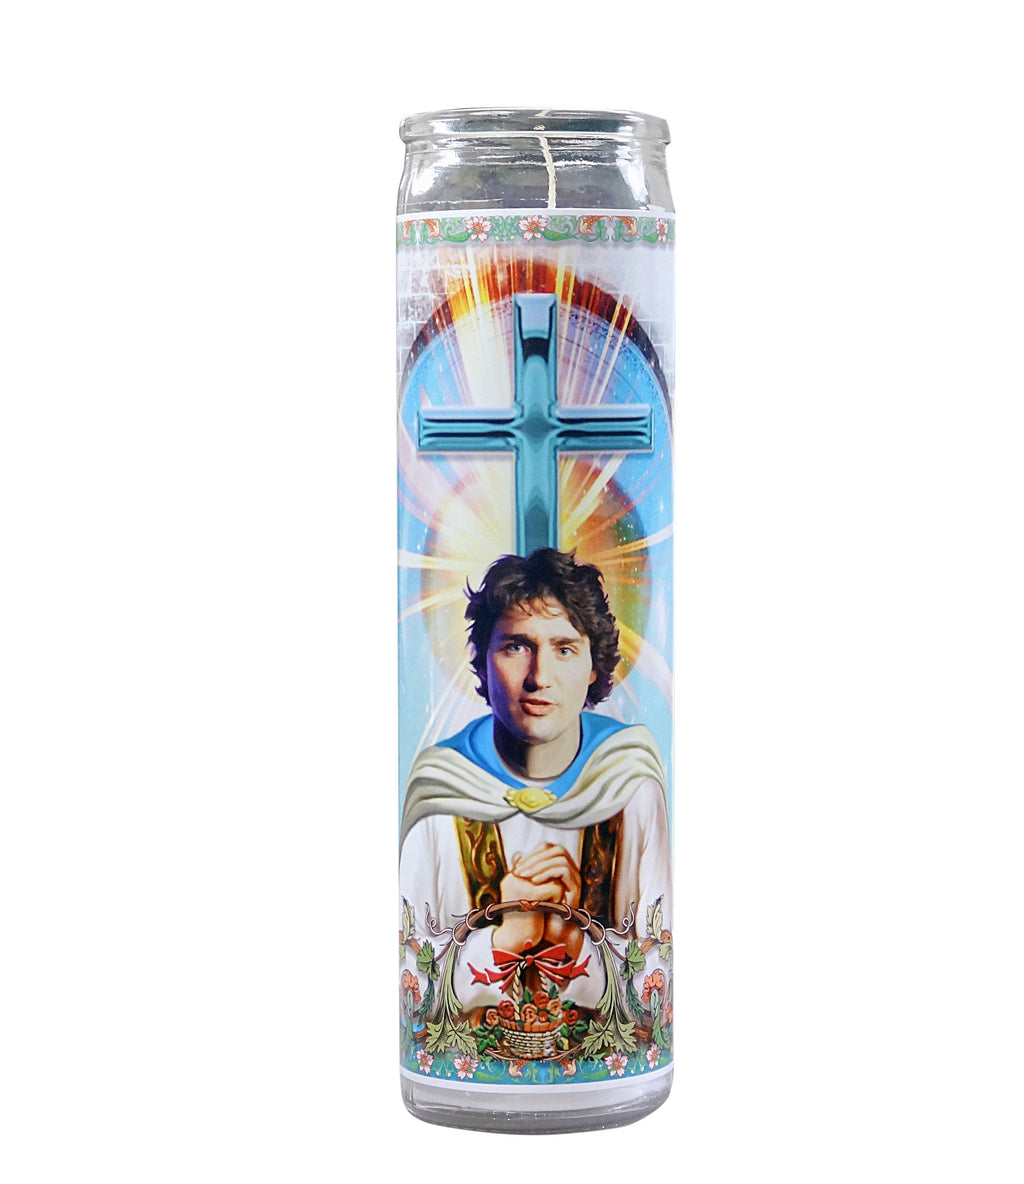 Prime Minister Justin Trudeau Celebrity Prayer Candle